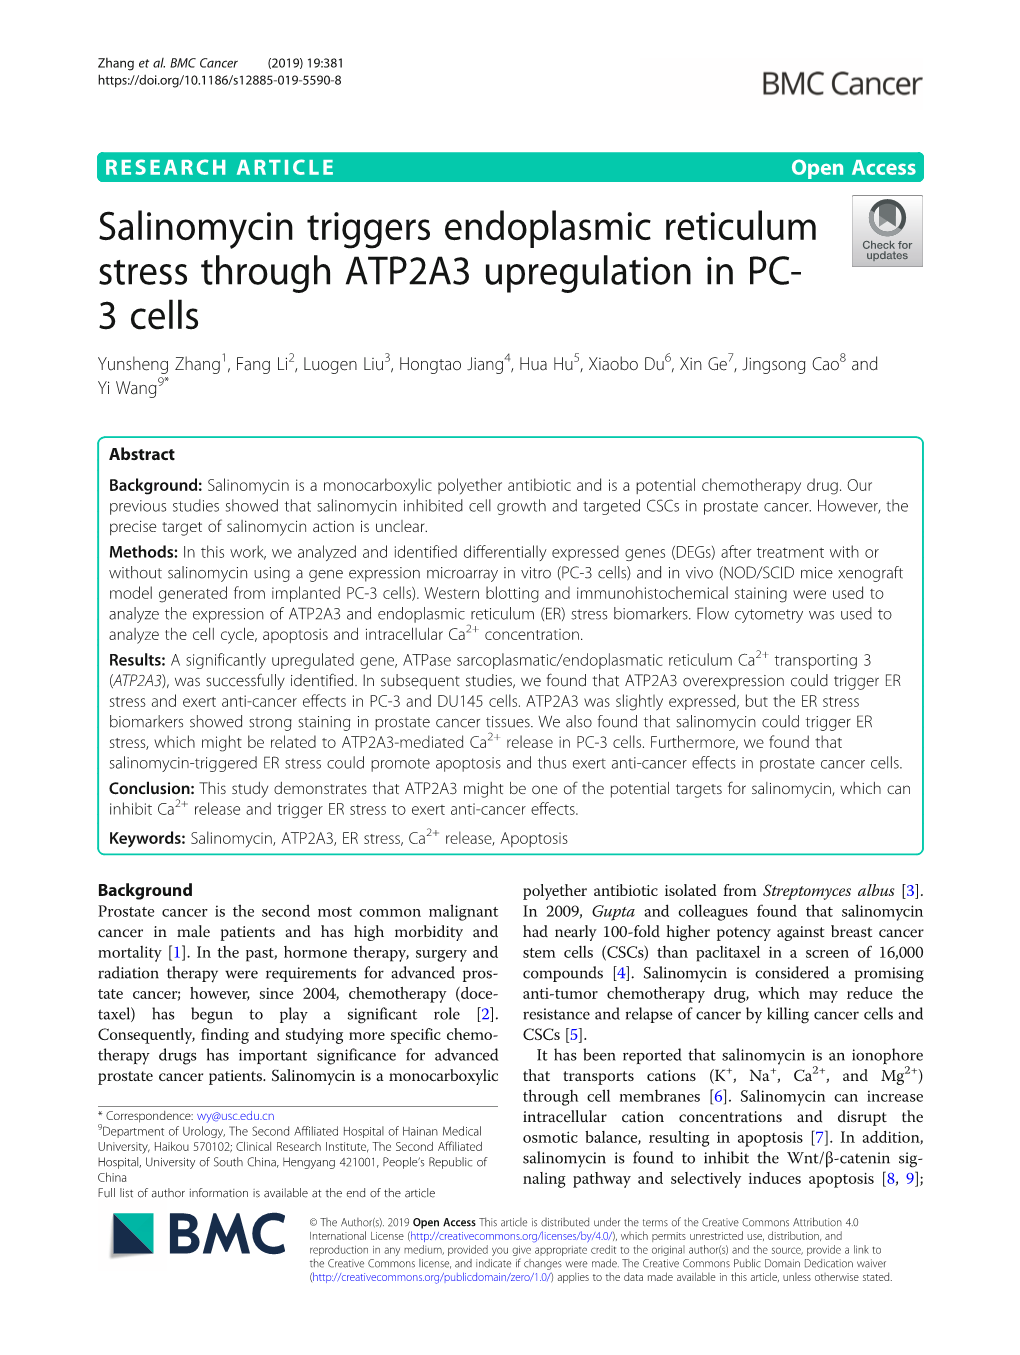 Salinomycin Triggers Endoplasmic Reticulum Stress Through ATP2A3